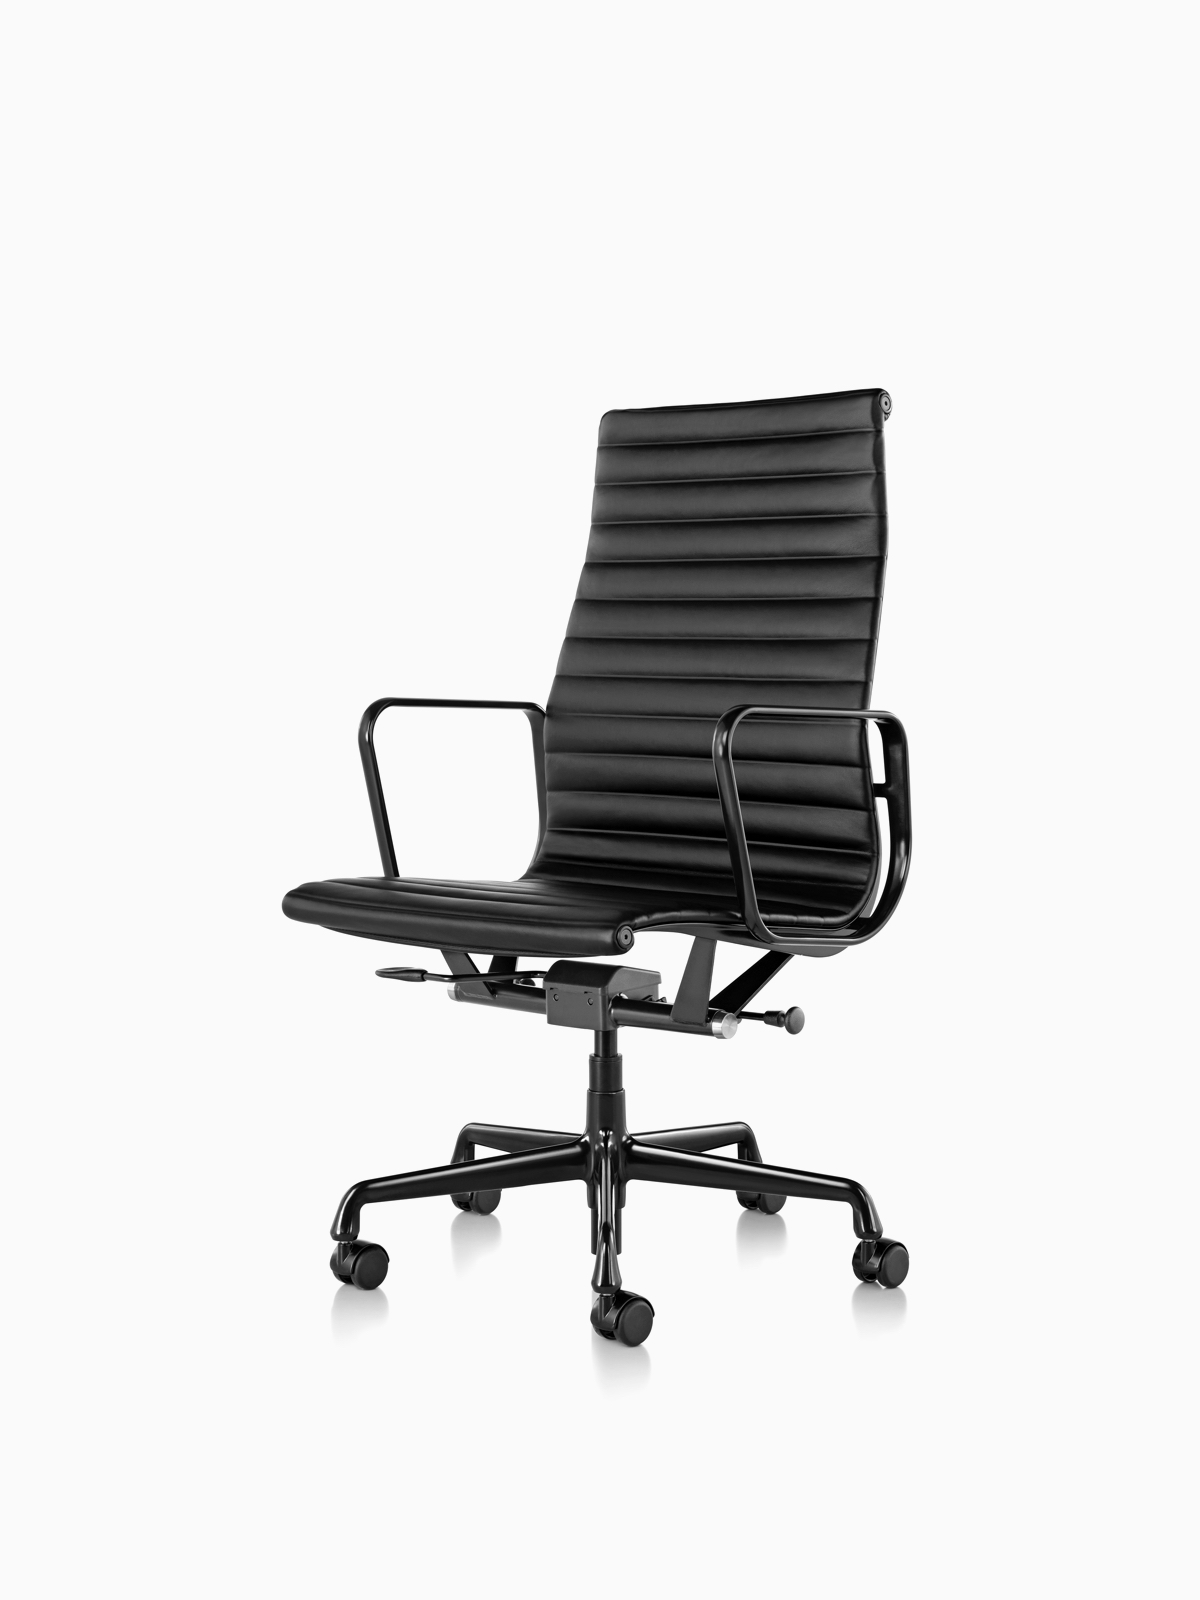 Herman Miller Desk Chairs Remar